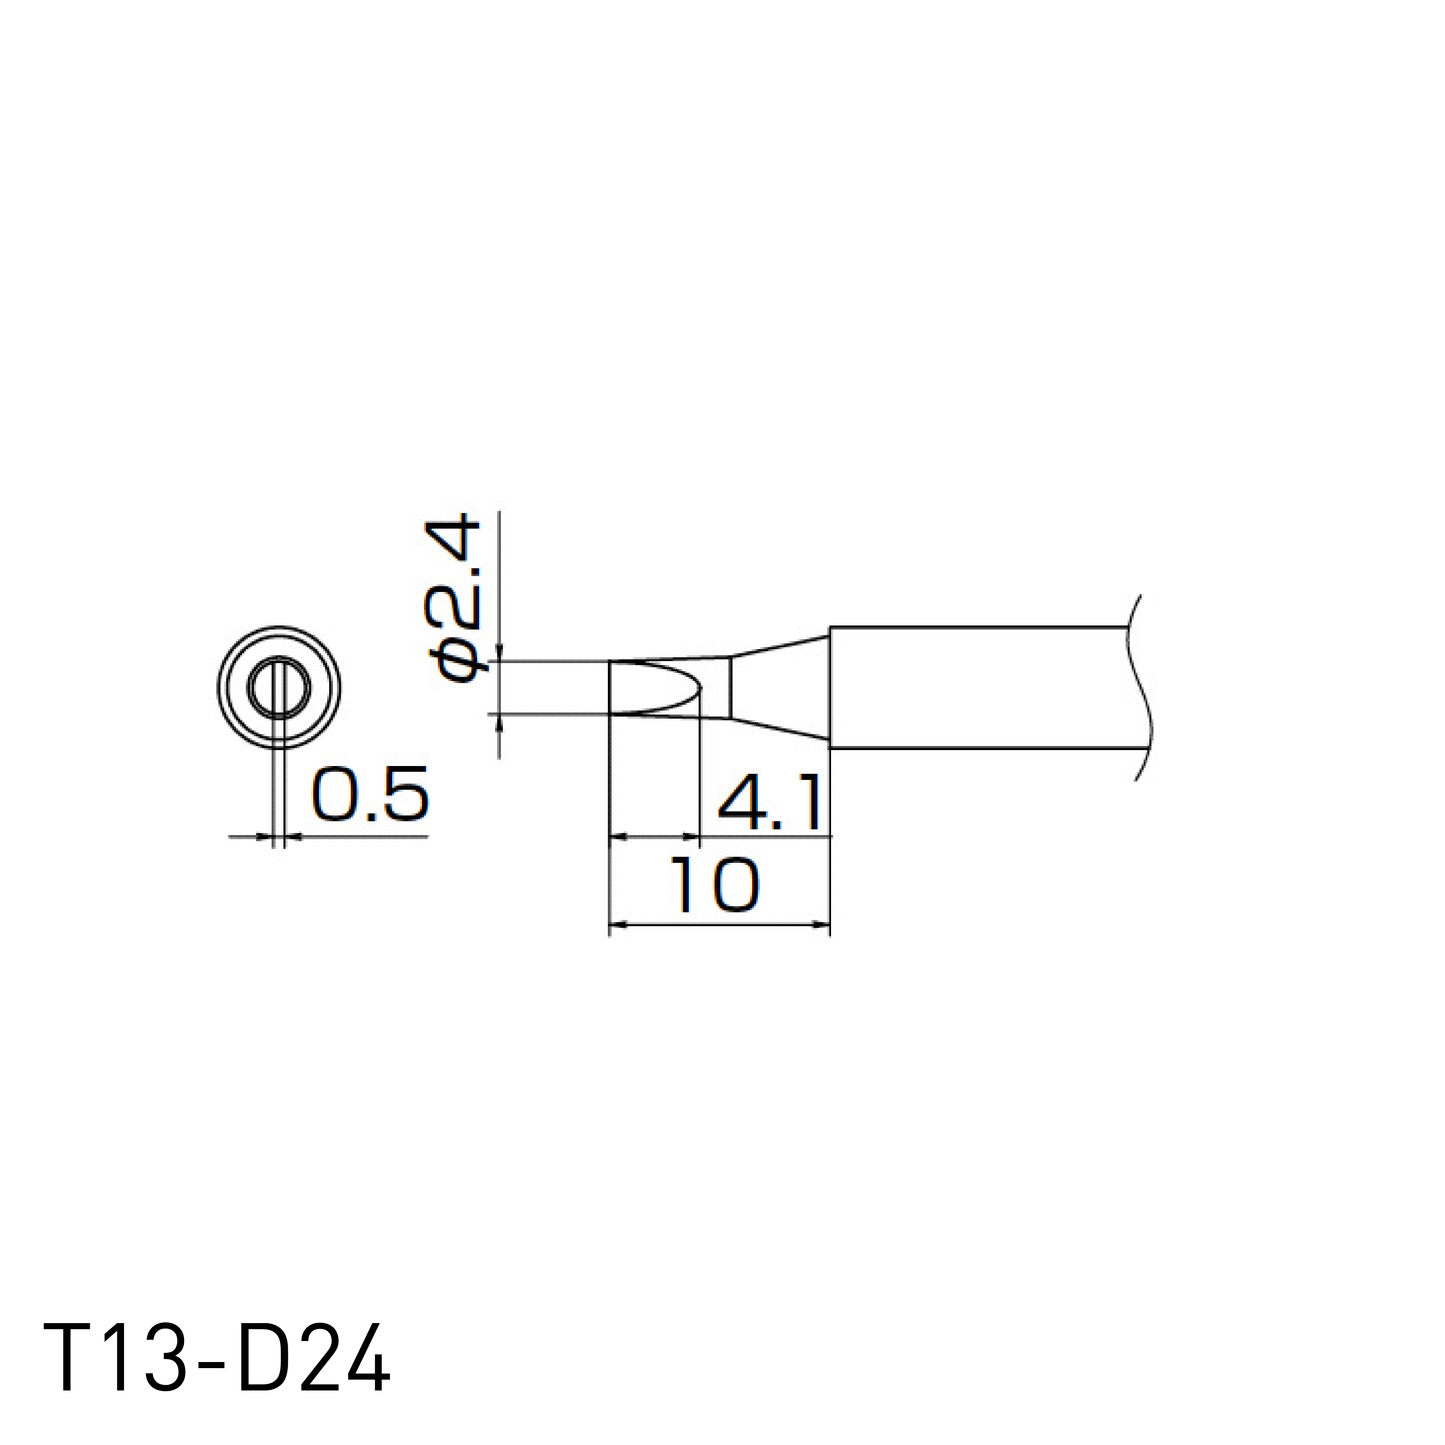 Hakko Soldering Iron Replacement Tip T13 - for FM2026 N2 soldering iron in flat-head screwdriver shape